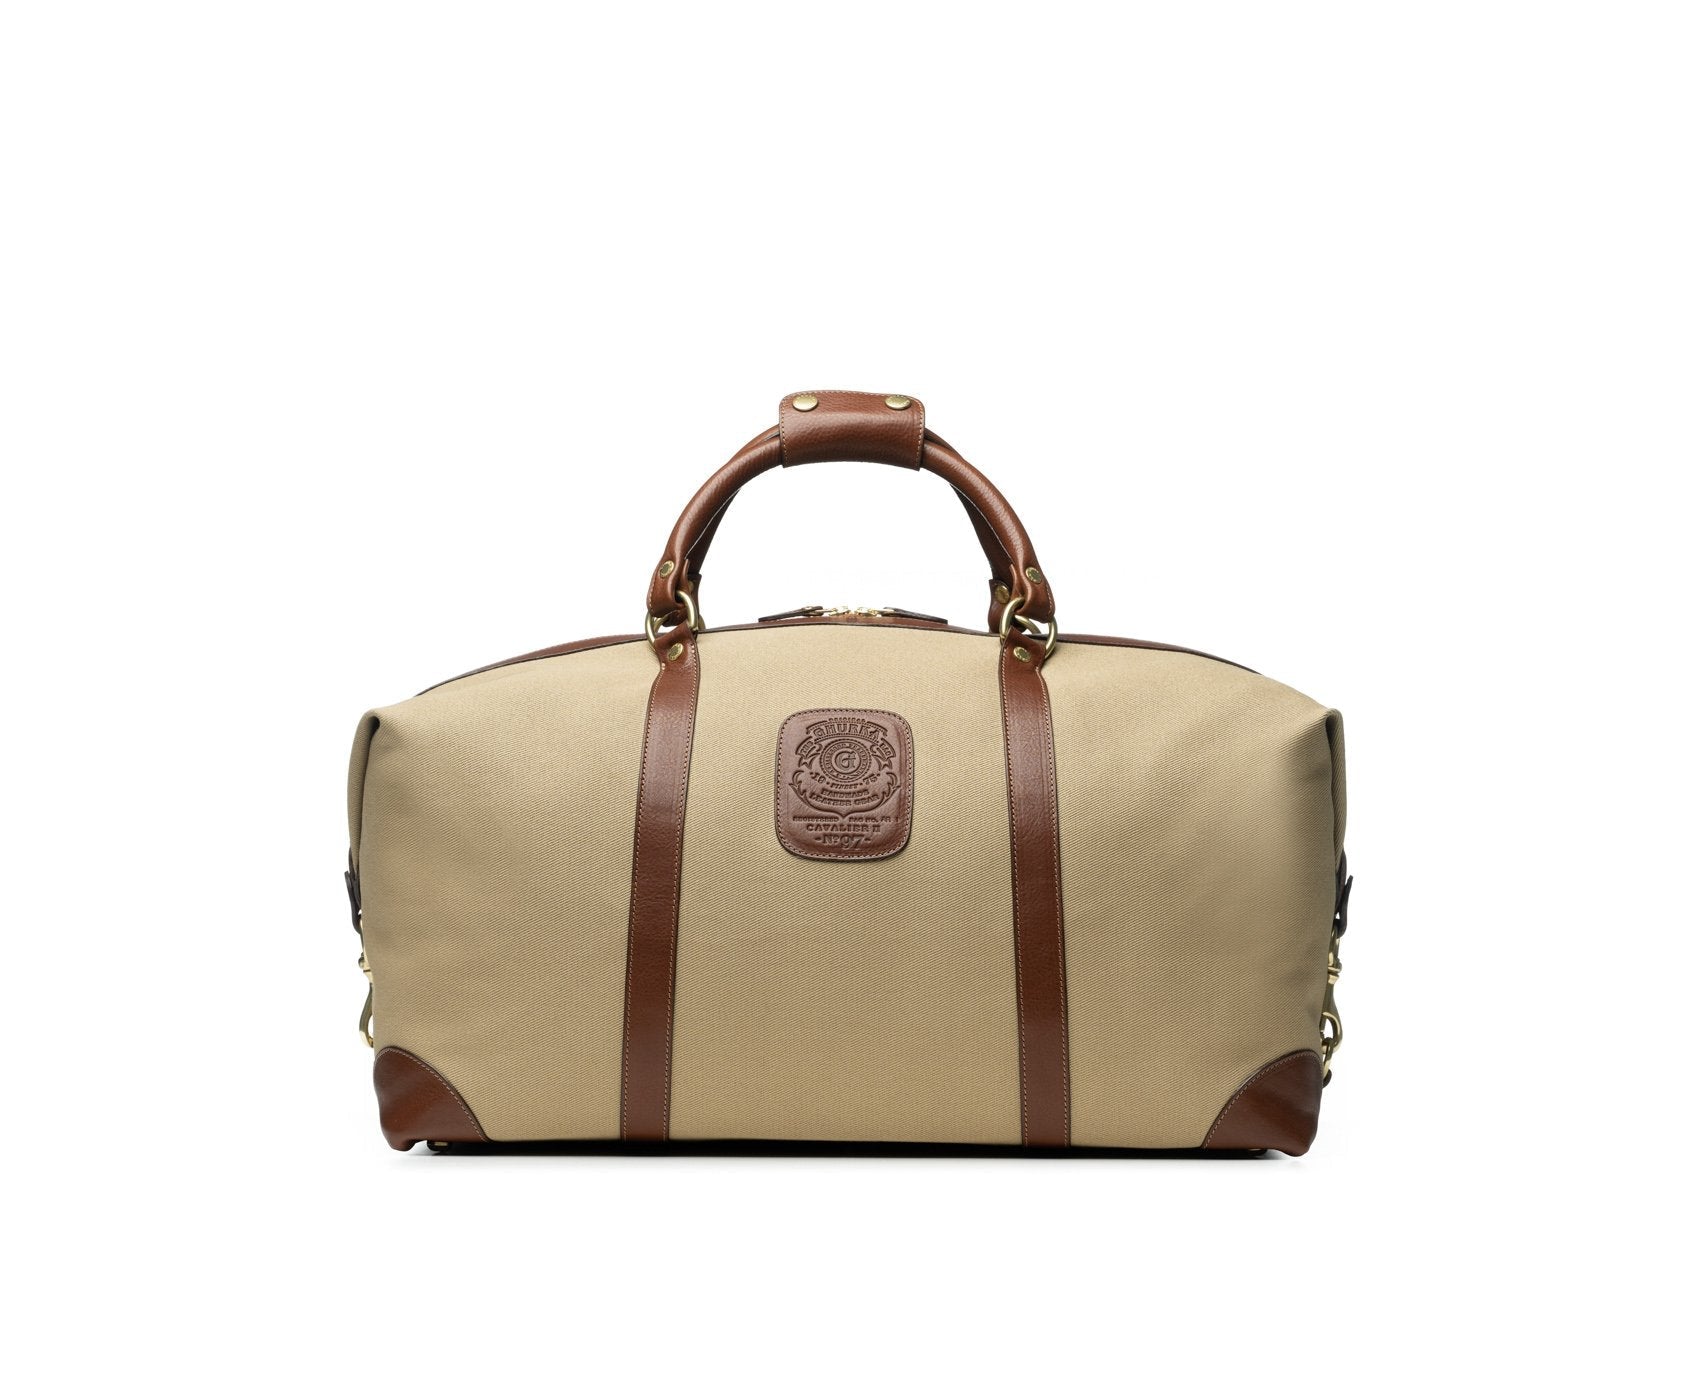 Carry-on Duffel Bag